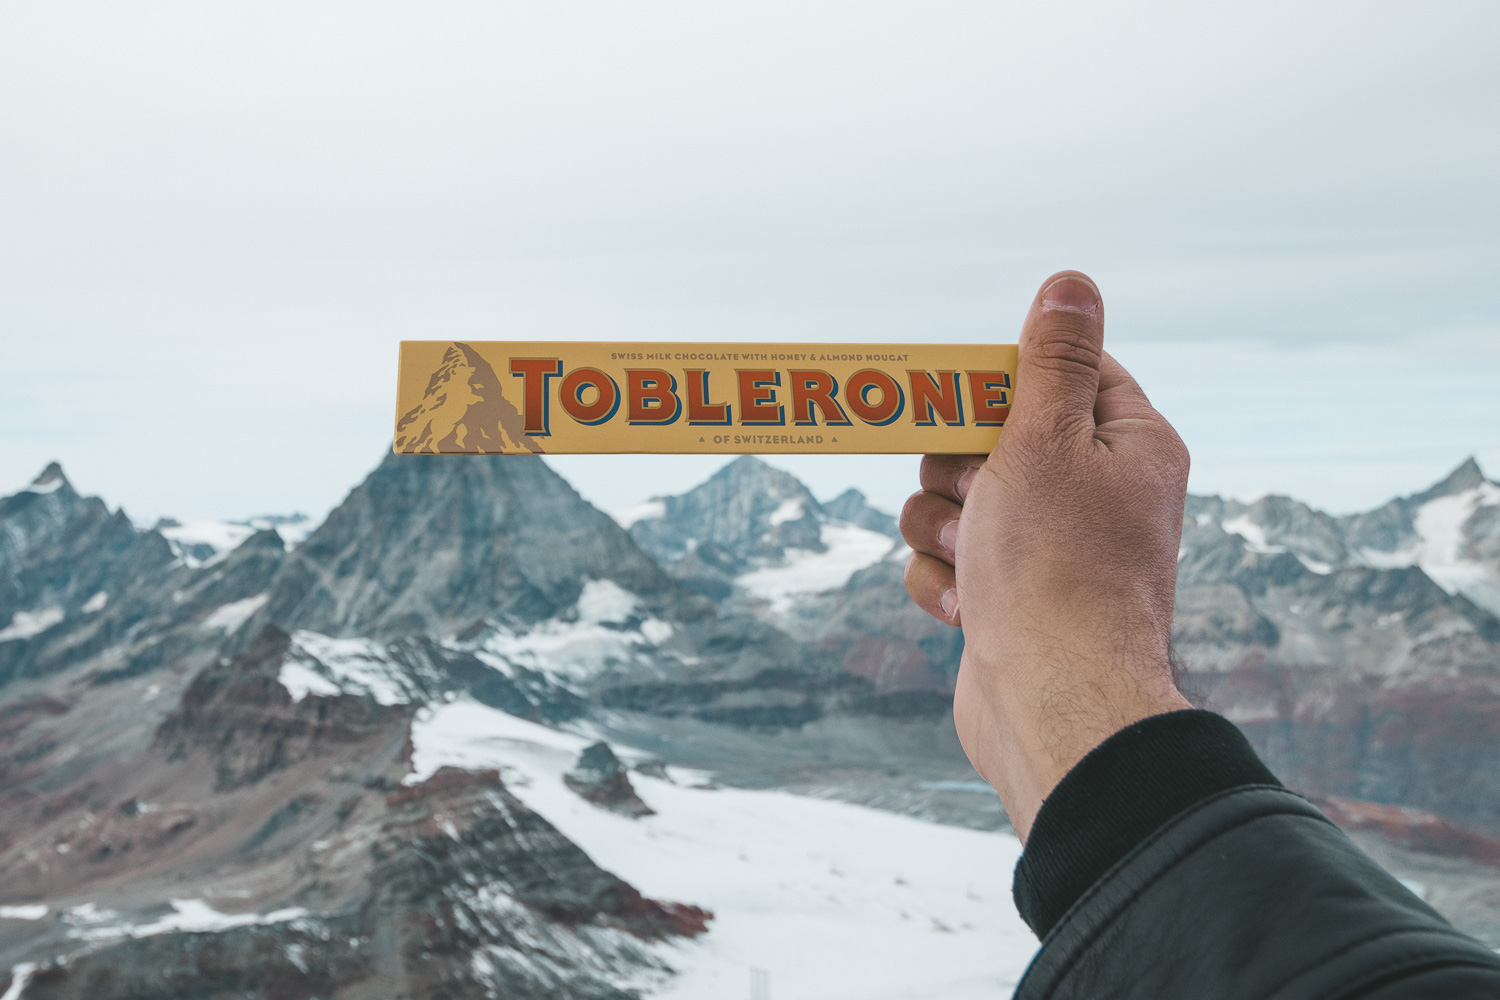 O Matterhorn é símbolo do chocolate Toblerone (Foto: Flymaniacs)